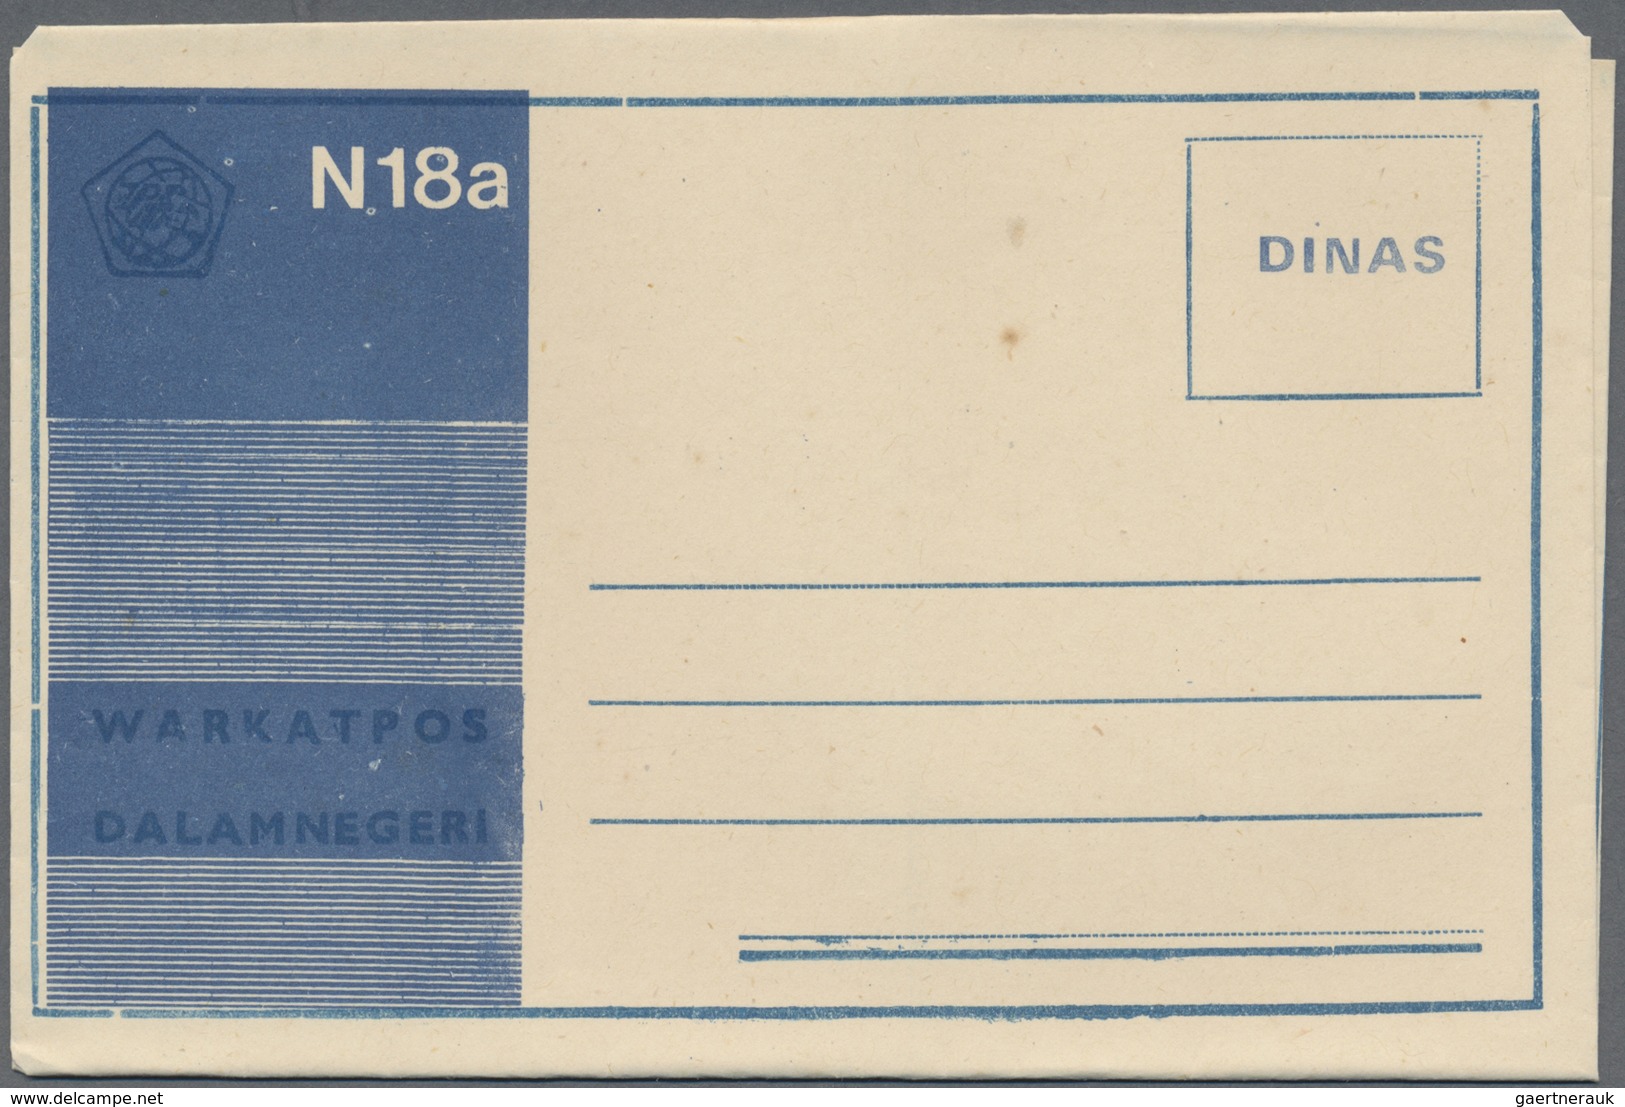 GA Indonesien: 1950/76, military / UN peacekeeping / govt. service special envelopes collection: Milita